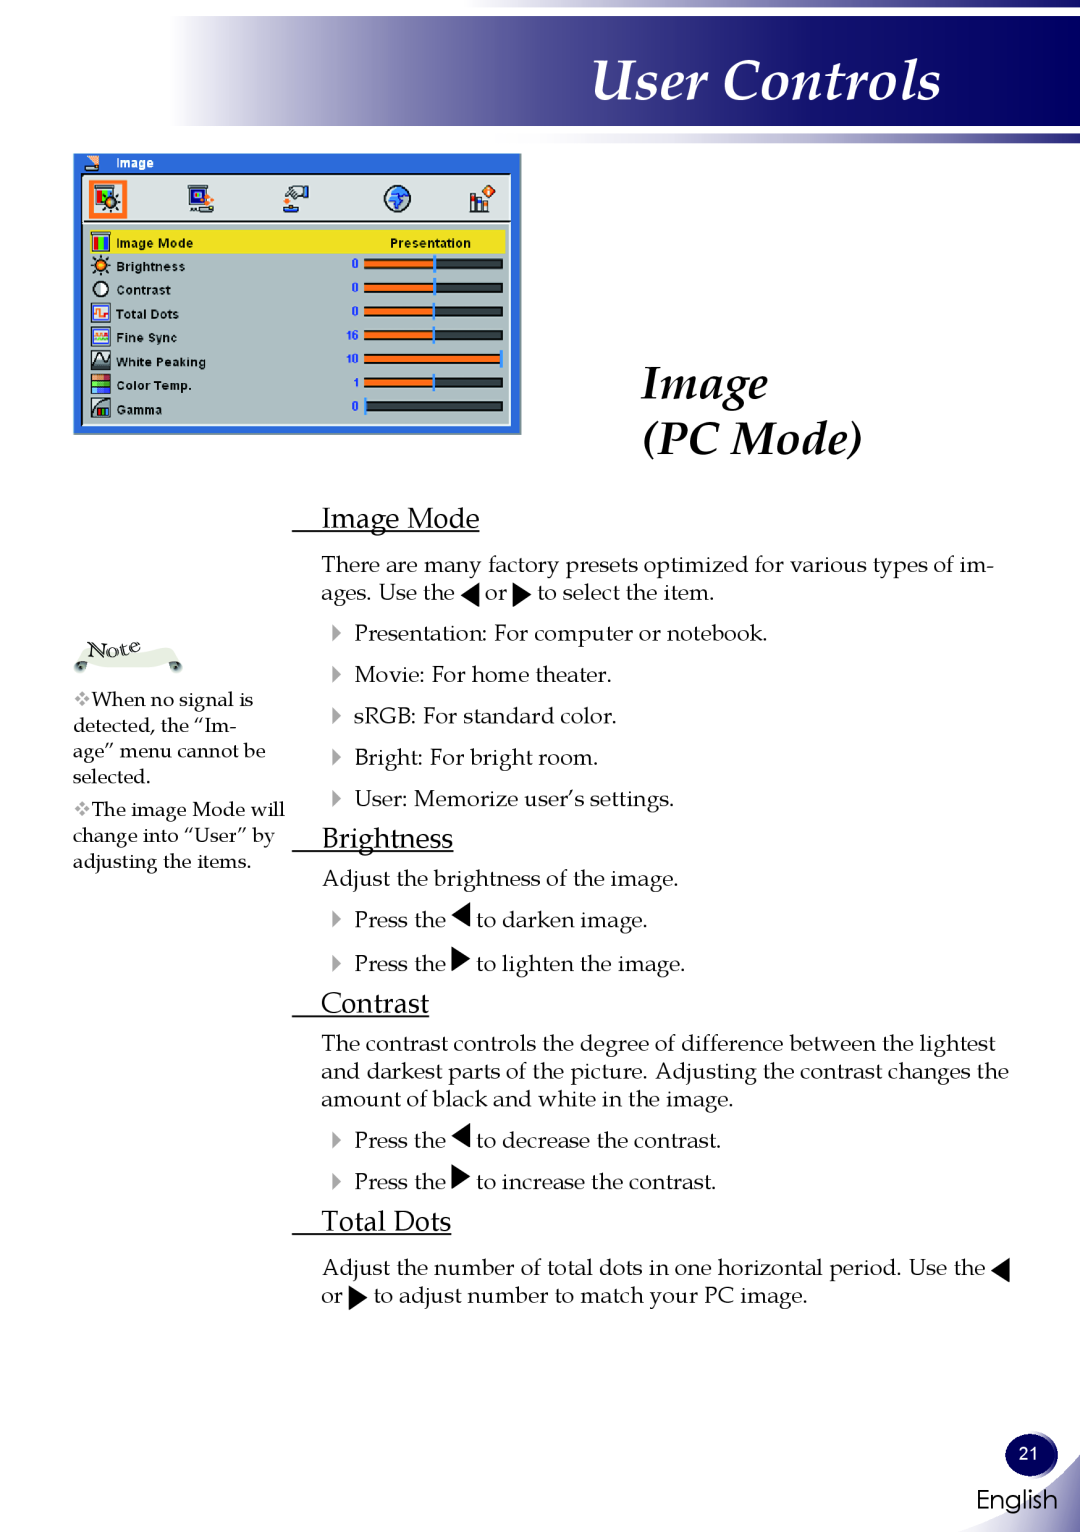 Sanyo PDG-DXL100 owner manual Image PC Mode, Image Mode, Brightness, Contrast, Total Dots, User Controls, English 